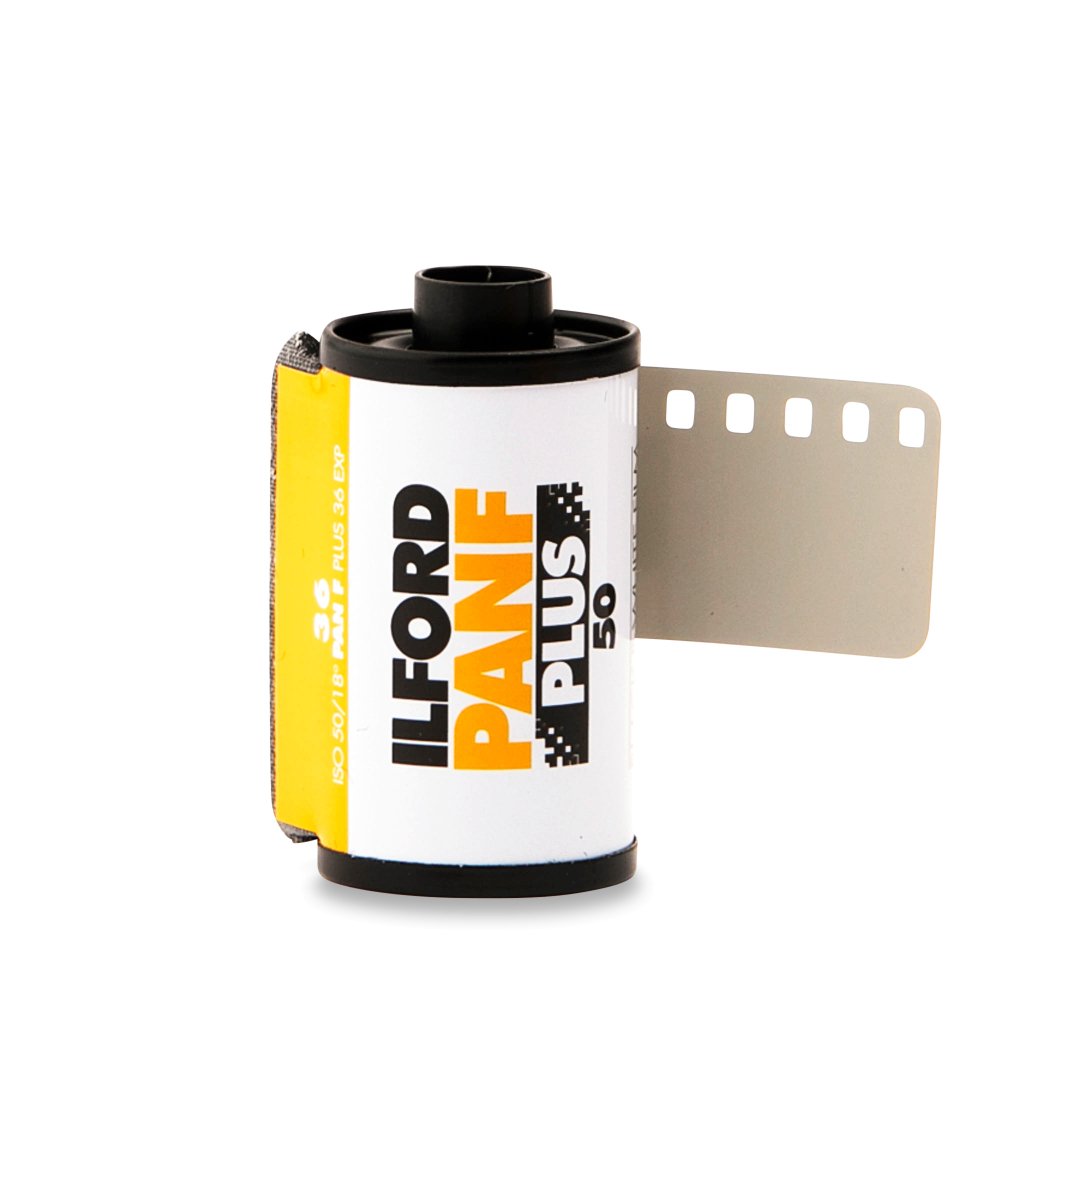 Ilford Pan F Plus - 35mm - 36 Exposure - Single Roll - Rewind Photo Lab - Ilford